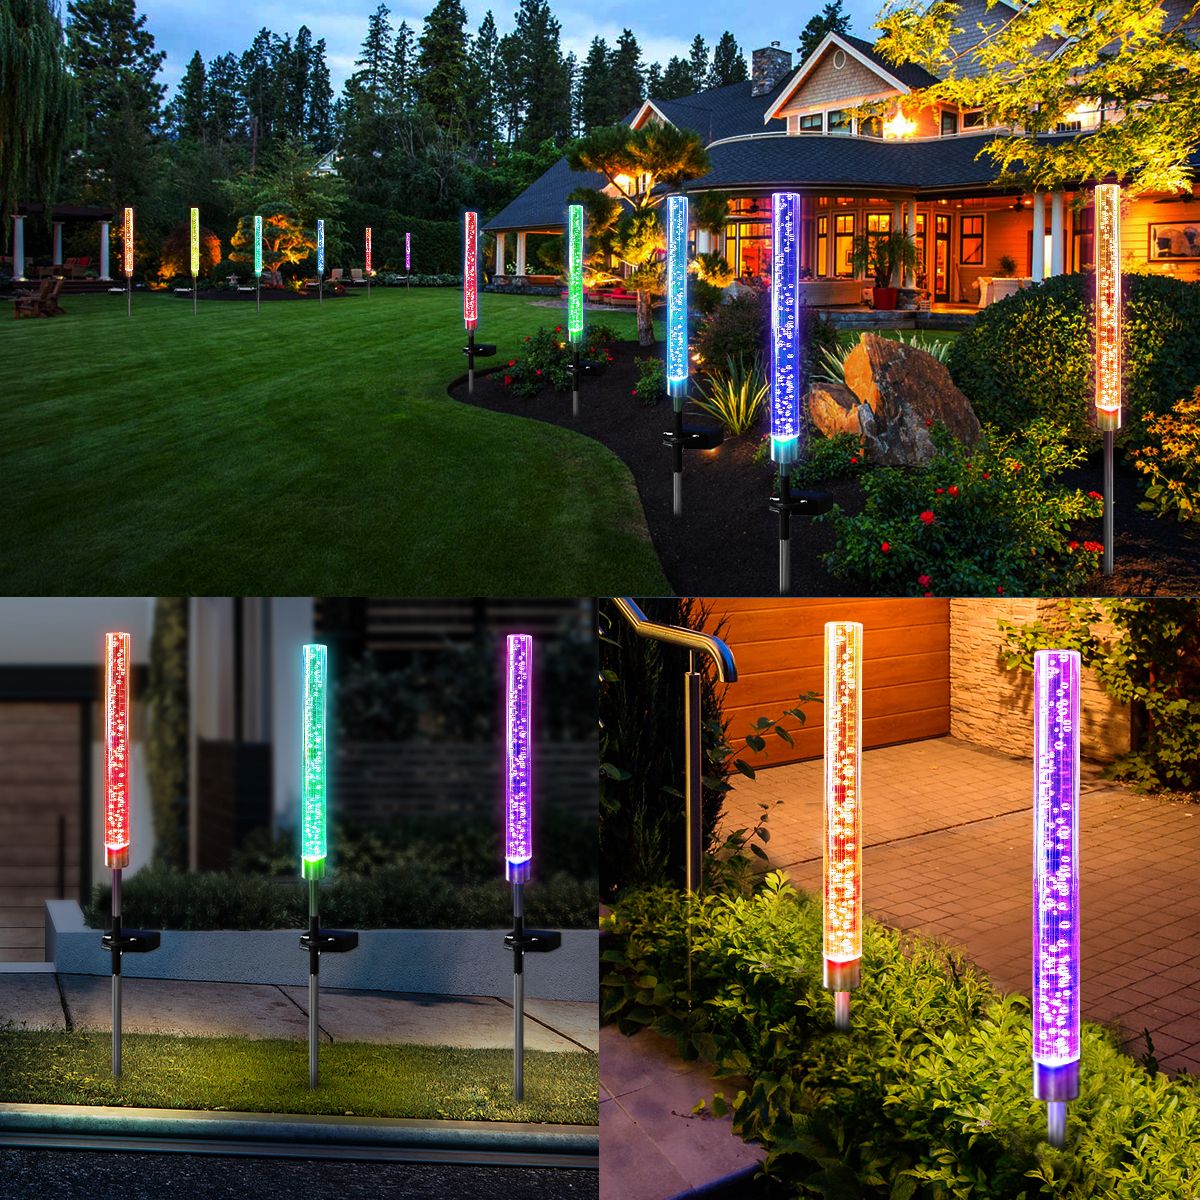 2PCS-Solar-Powered-Acrylic-Bubble-Light-LED-RGB-Lawn-Garden-Landscape-Lamp-Decor-Lawn-Light-Path-Lig-1693906